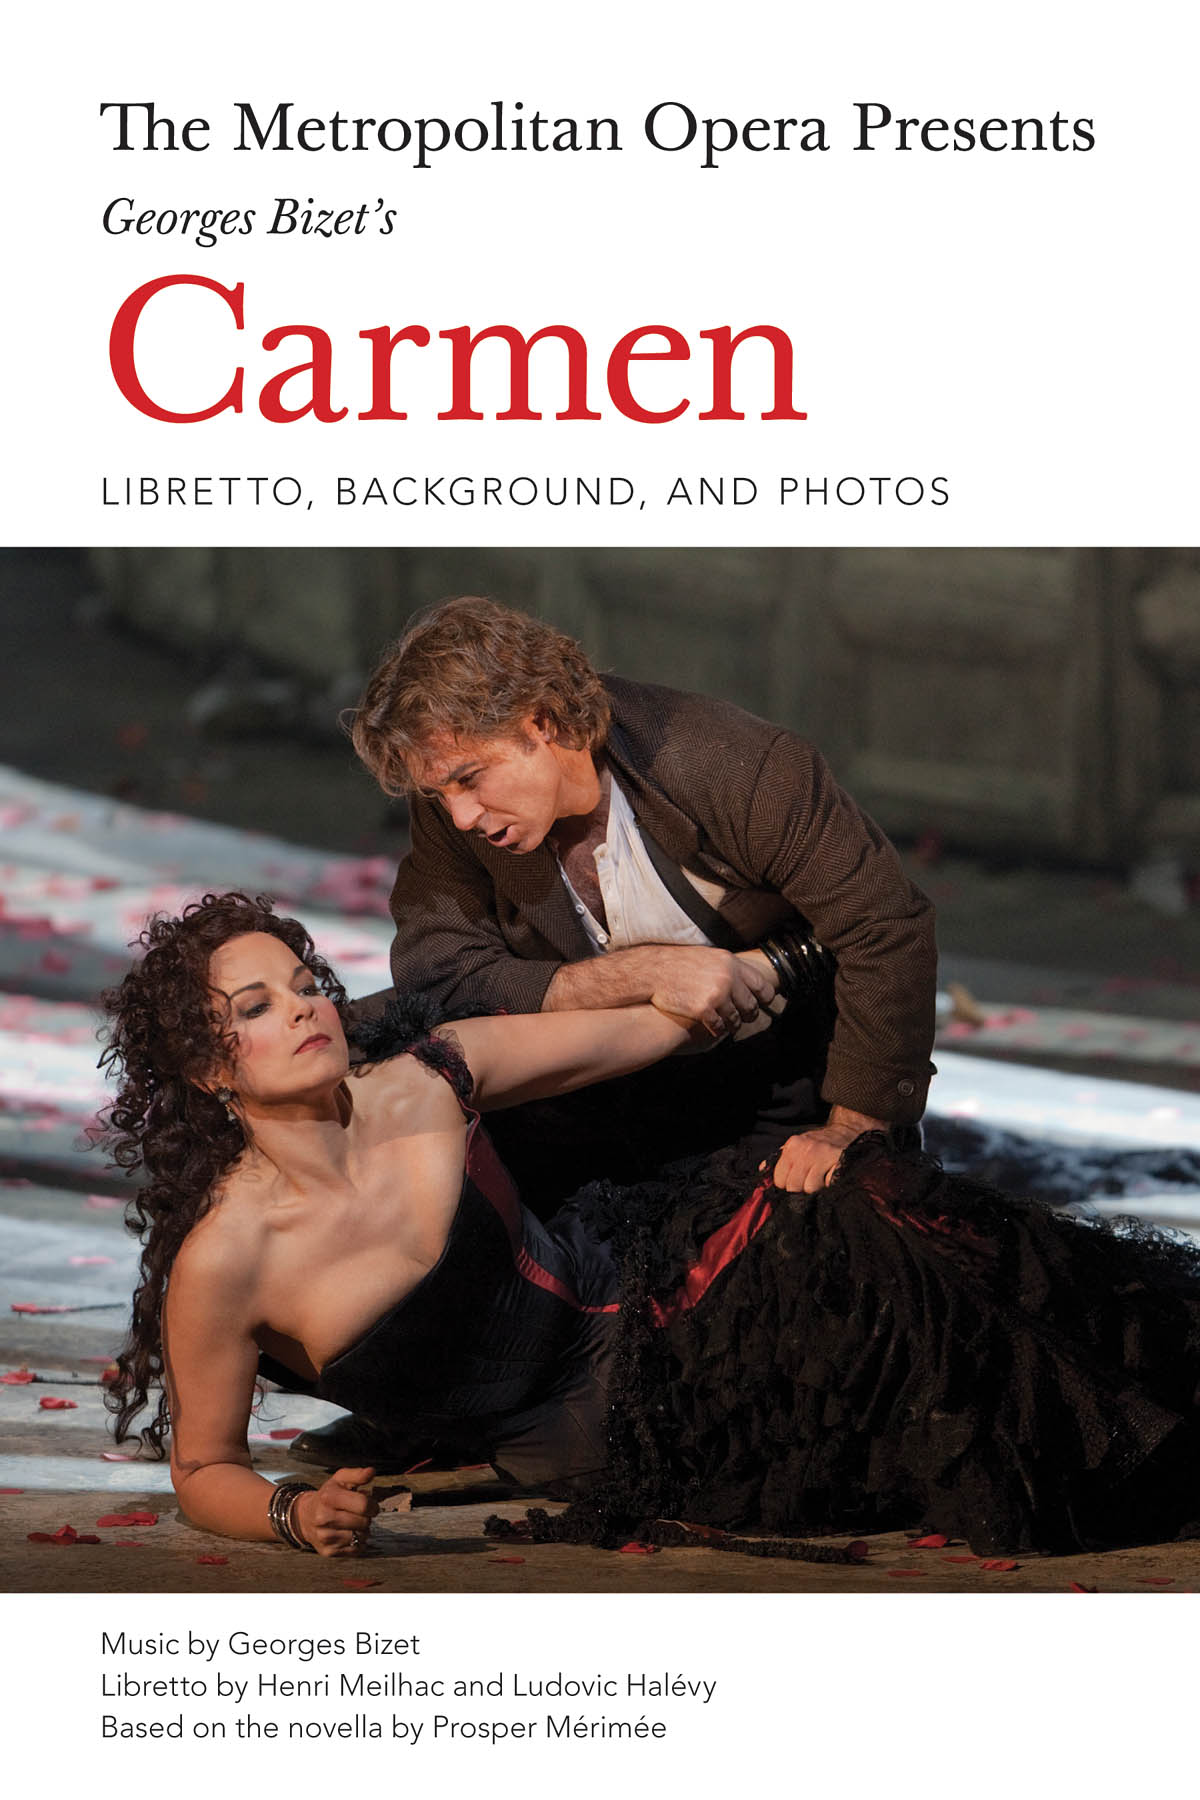 The Metropolitan Opera Presents: Carmen(Libretto, Background, and Photos)